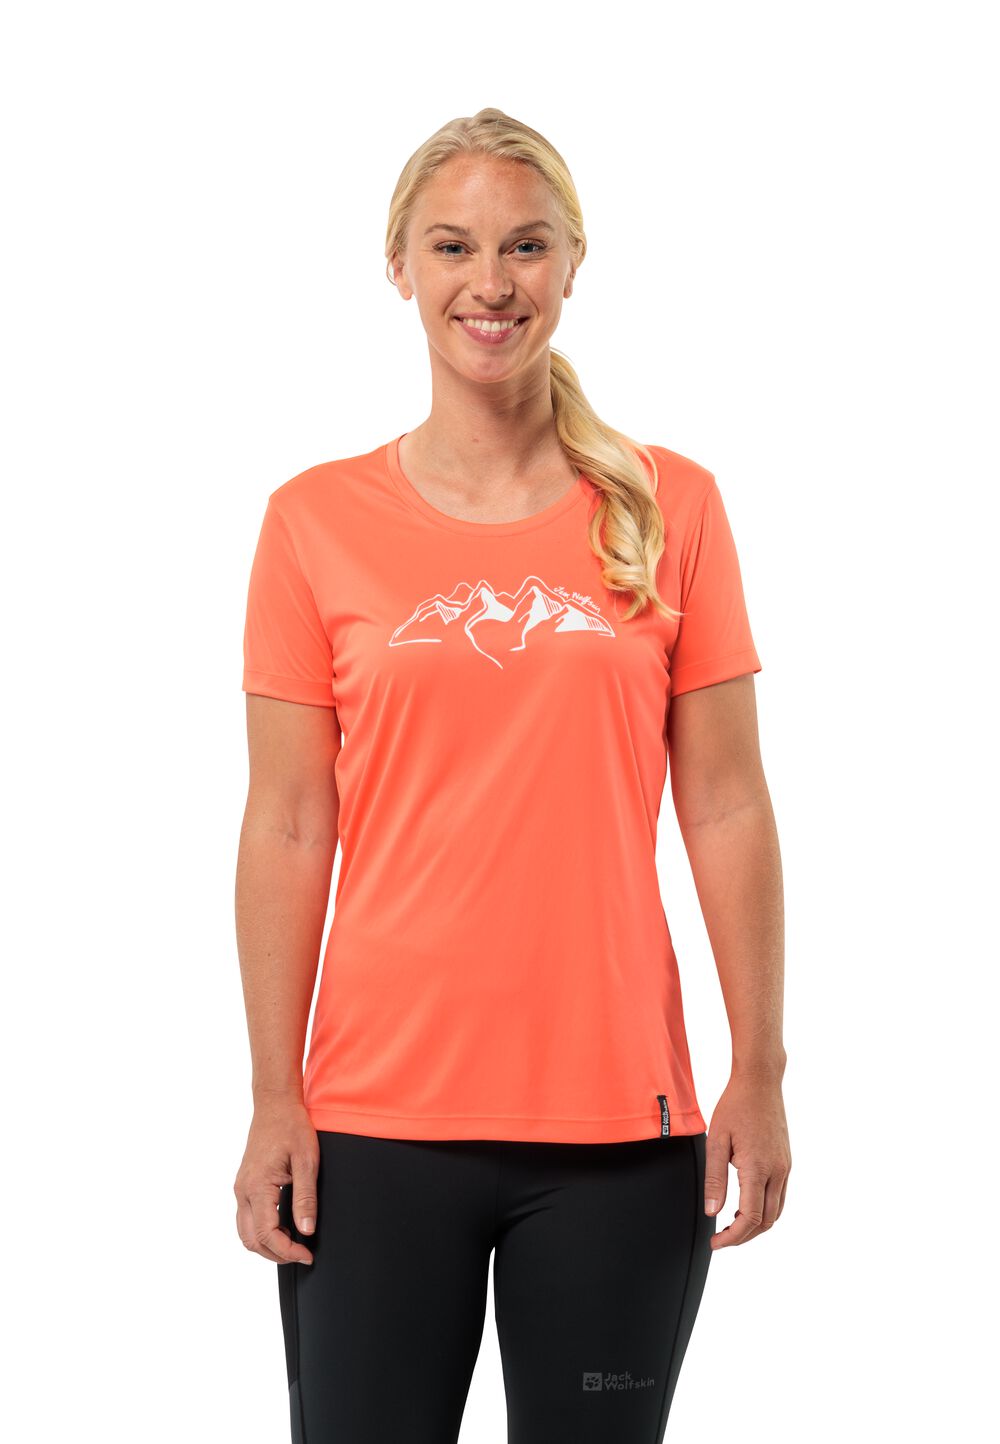 Jack Wolfskin Peak Graphic T-Shirt Women Functioneel shirt Dames XS rood digital orange